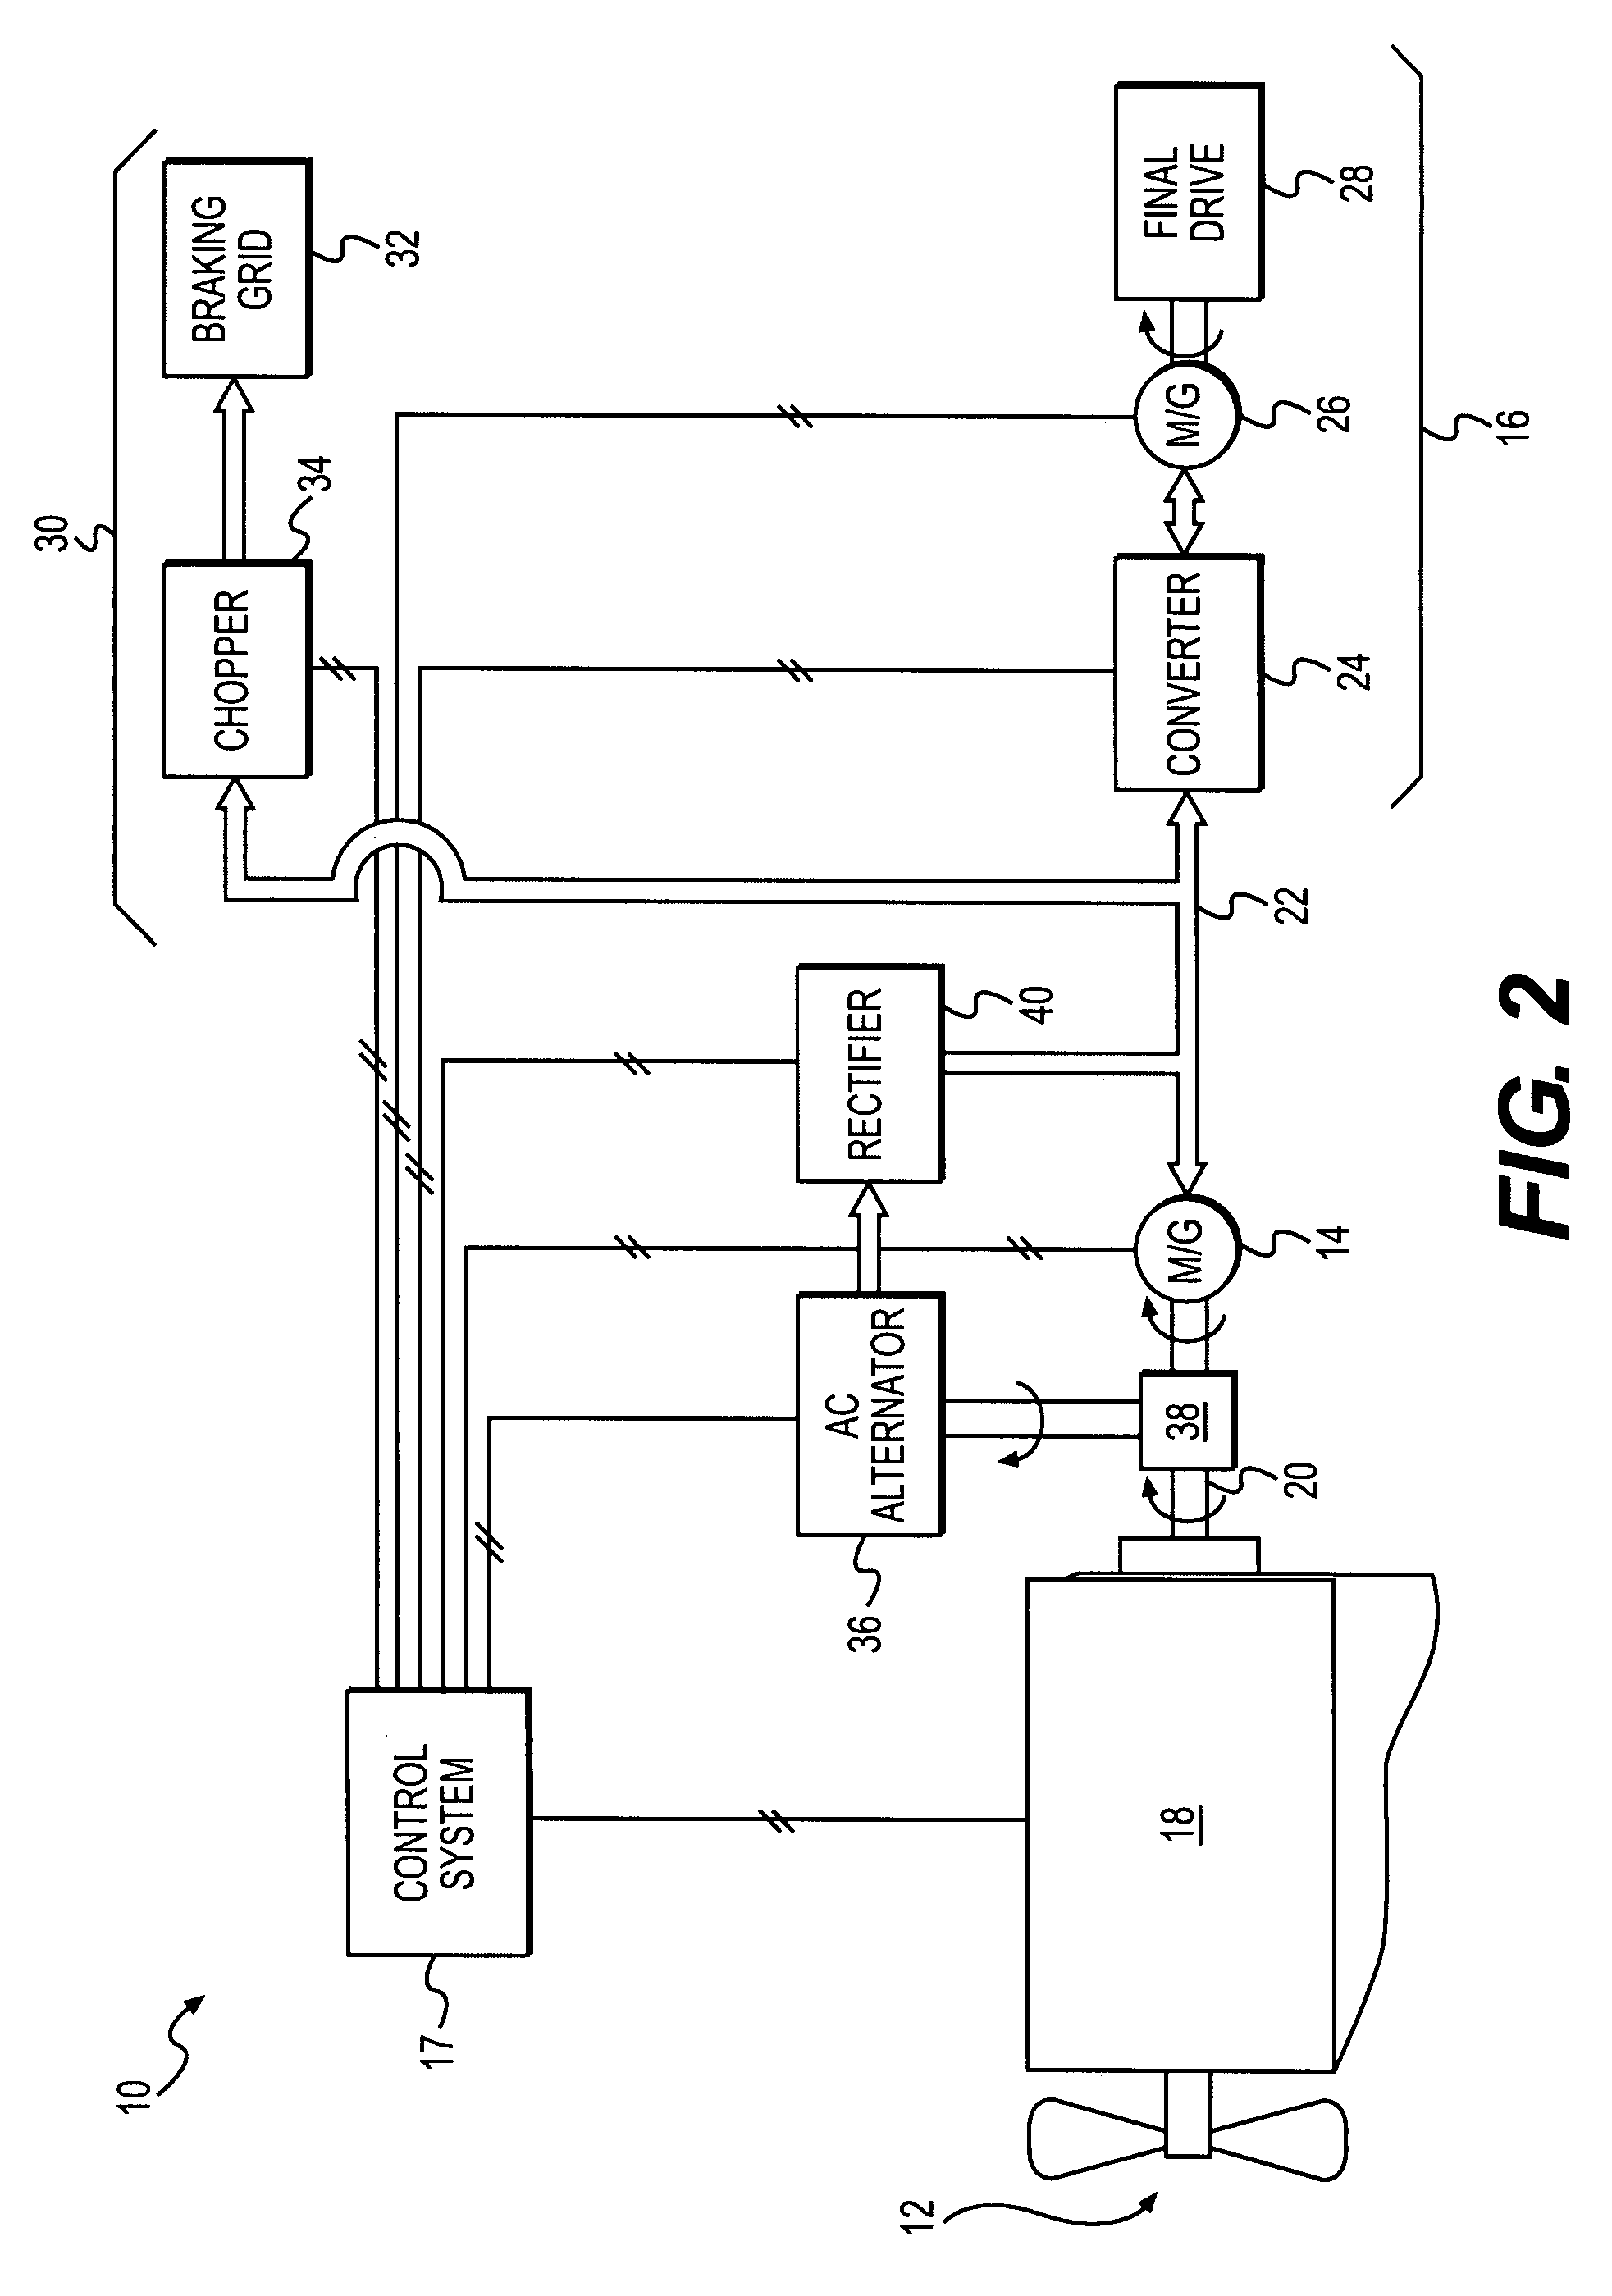 Electric powertrain system having bidirectional DC generator